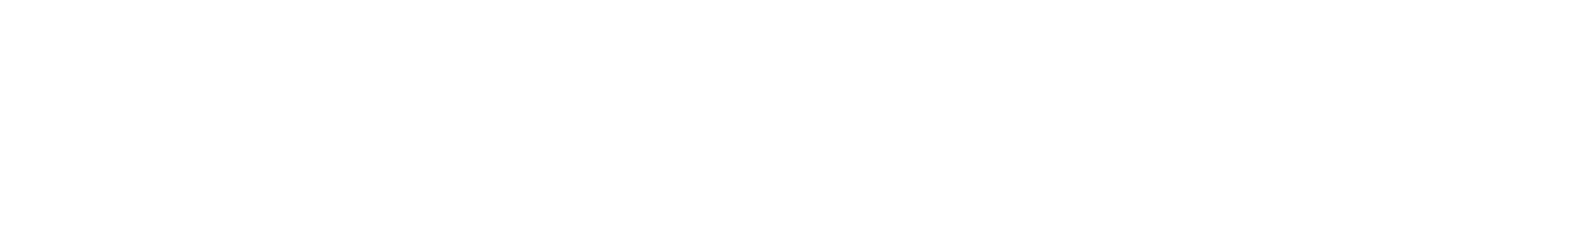 Reitir fasteignafélag logo large for dark backgrounds (transparent PNG)